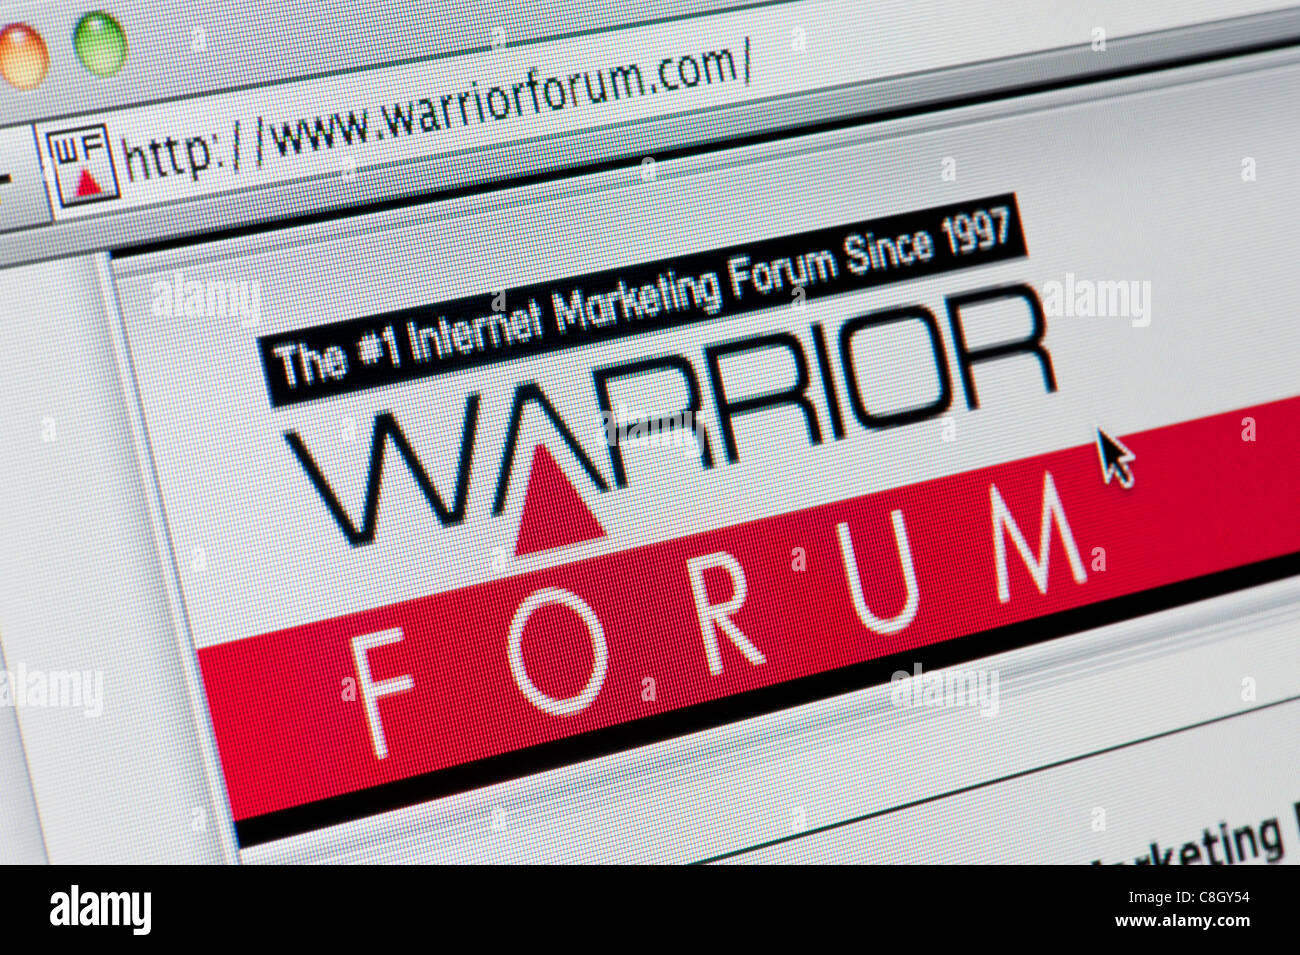 247 Local Plumbers - Warrior Forum